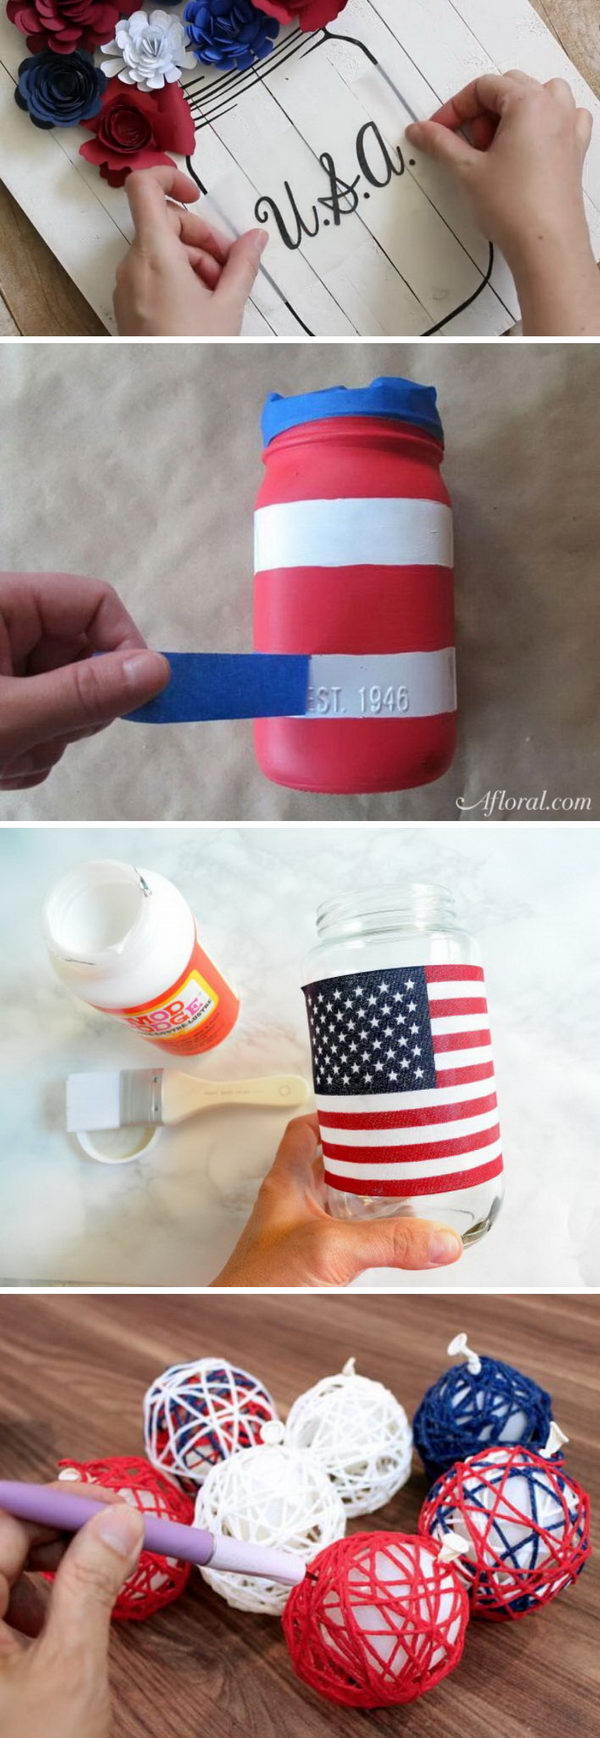 Easy DIY Patriotic Crafts for 4th of July. 